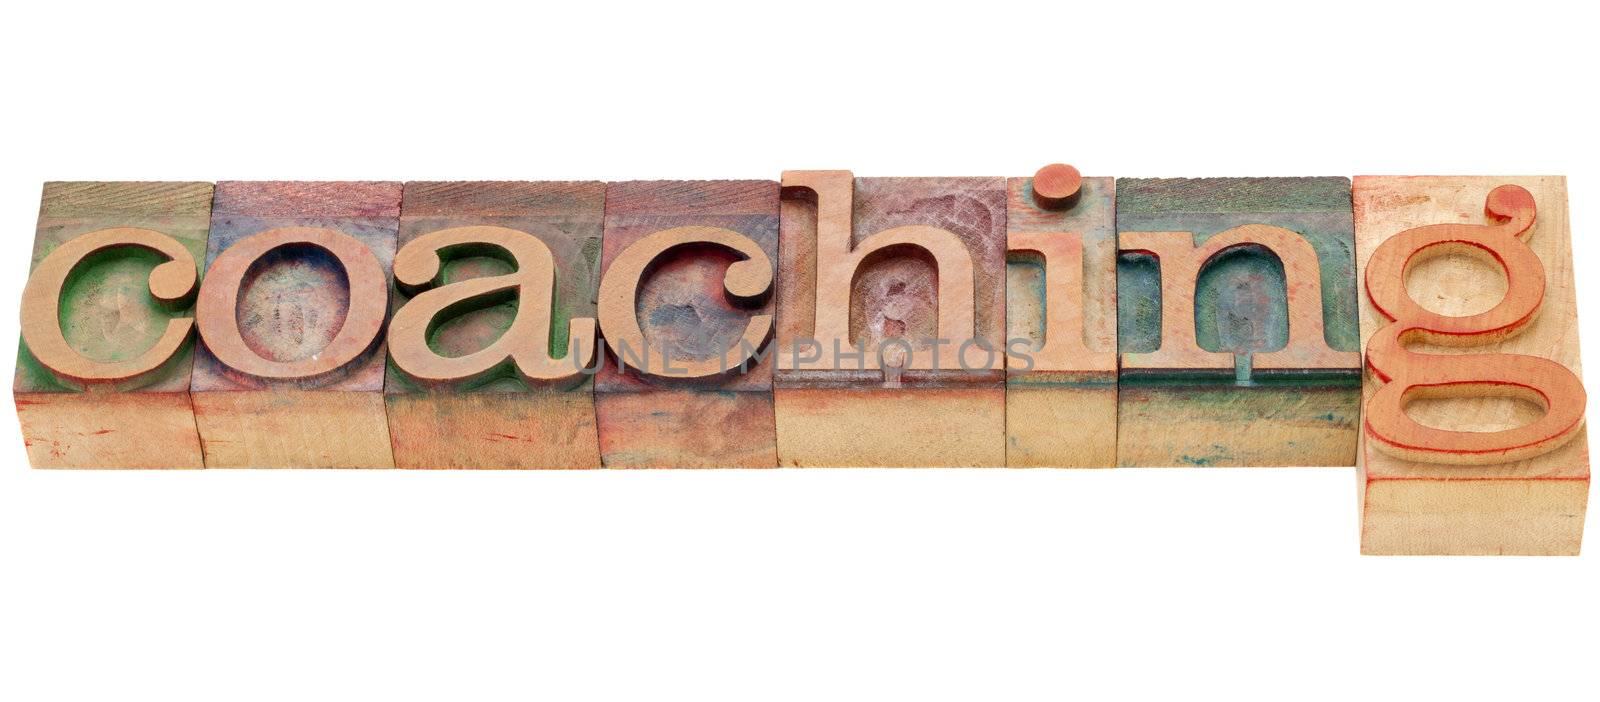 coaching  - isolated word in vintage wood letterpress printing blocks